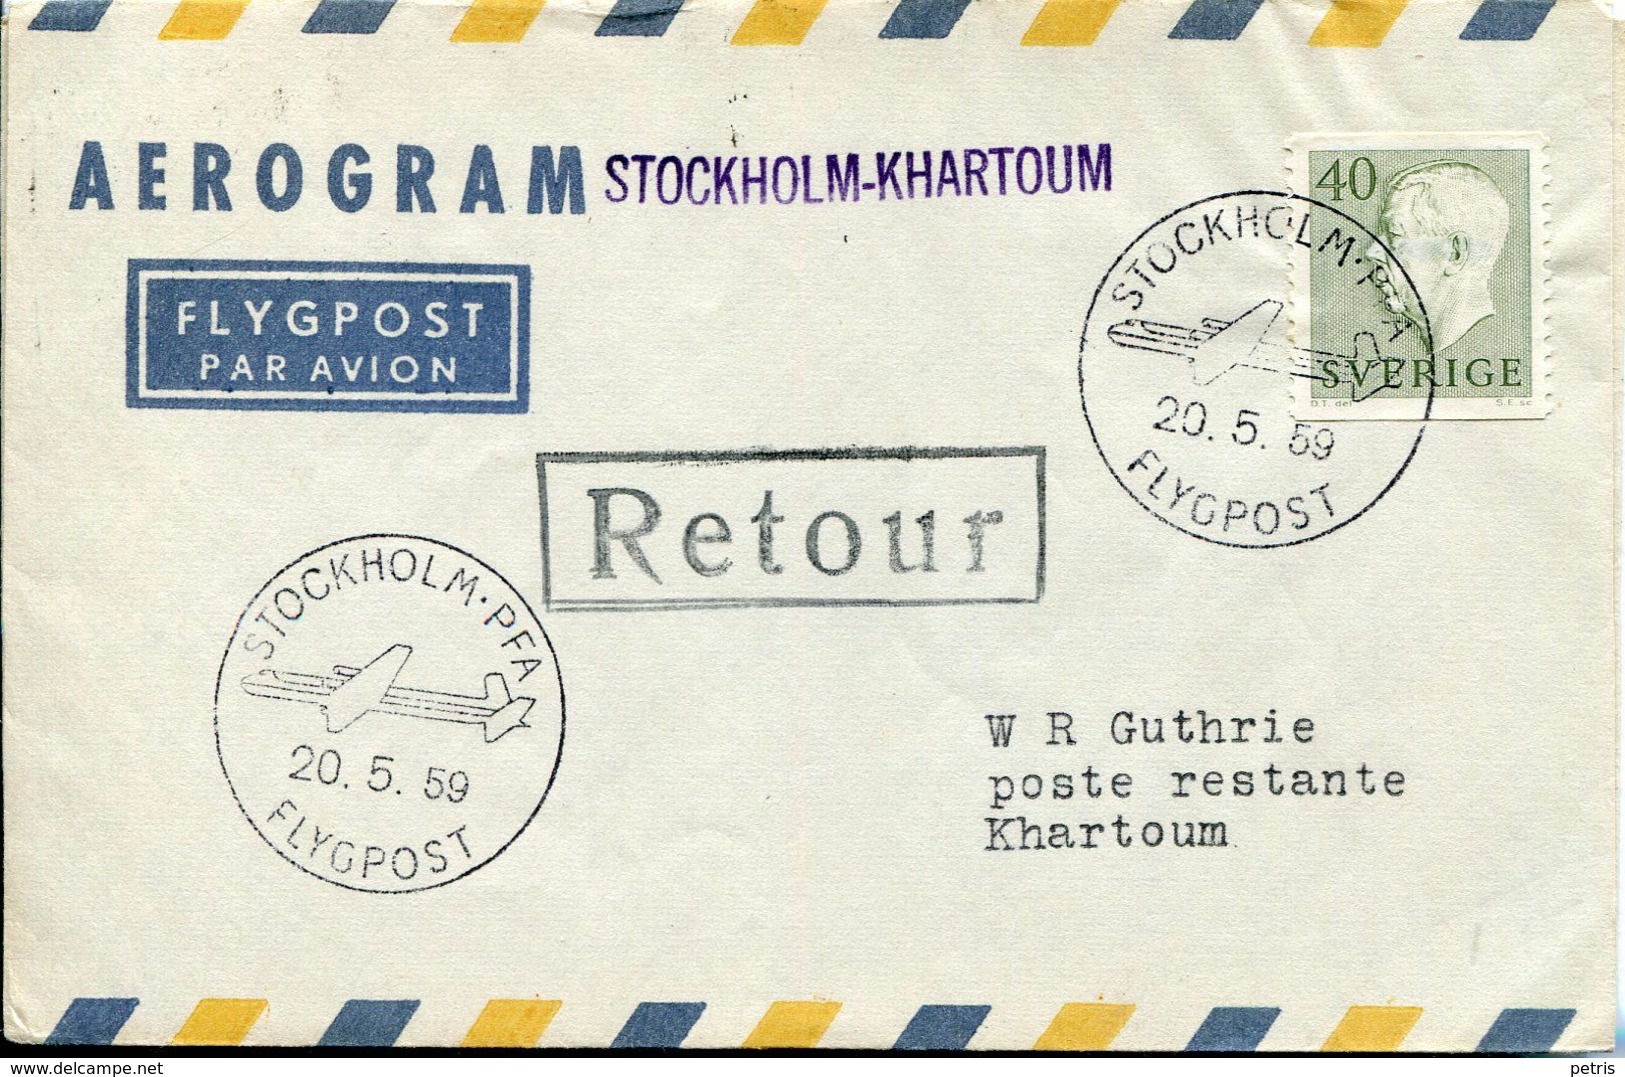 Sverige 1959 Aerogram  First Flight Jet Flygpost - Lot. 506 - Errors, Freaks & Oddities (EFO)